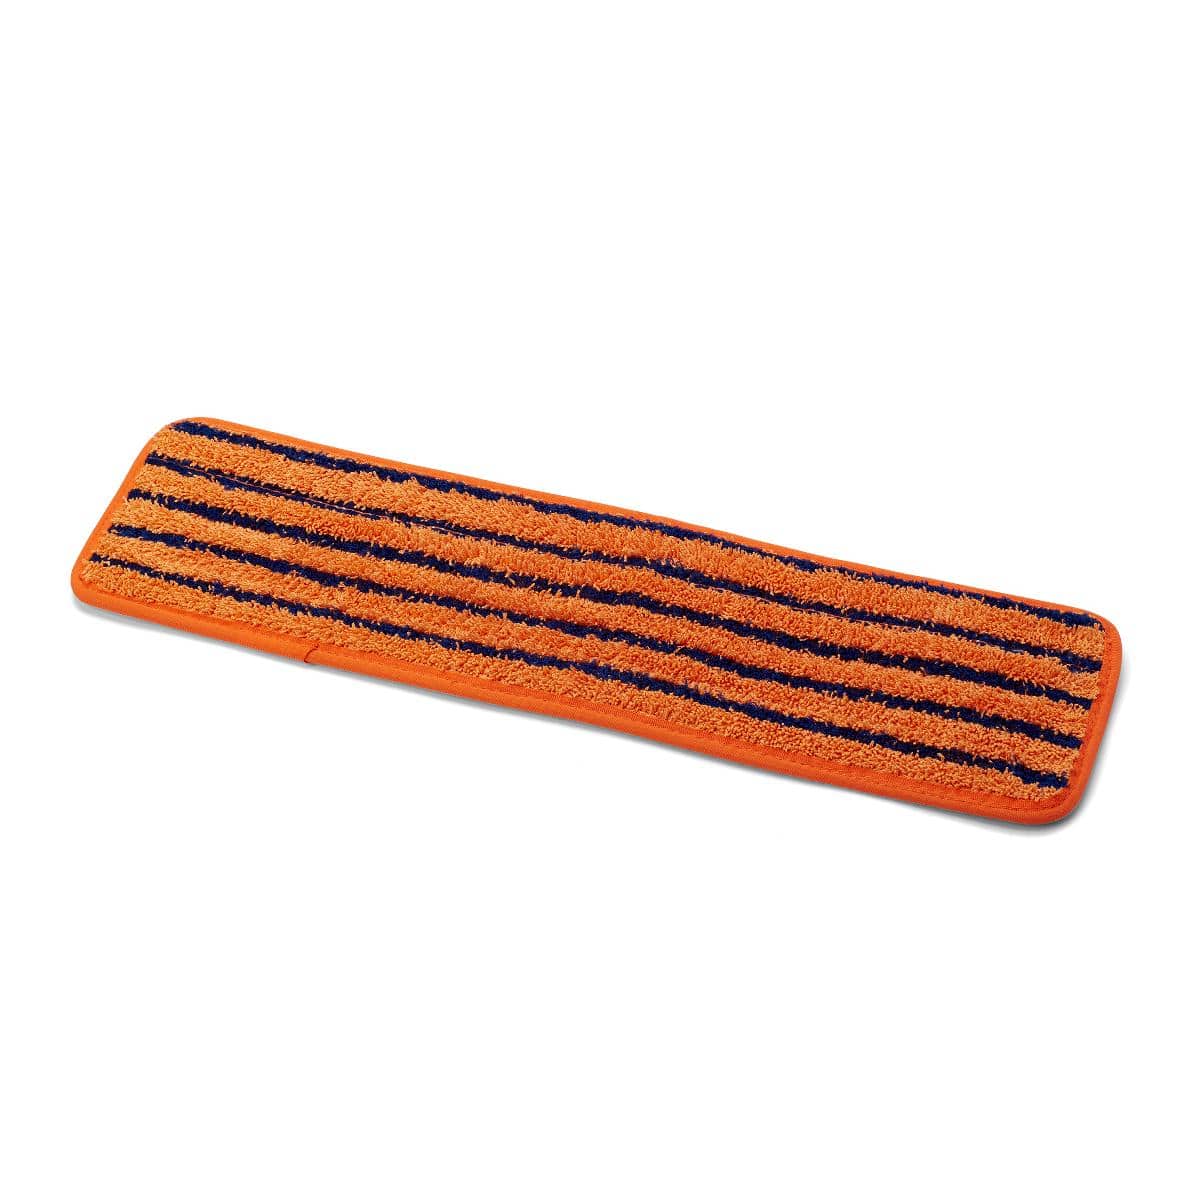 Medline Orange / Case of 100 Medline 18" Premium Microfiber Super Mops